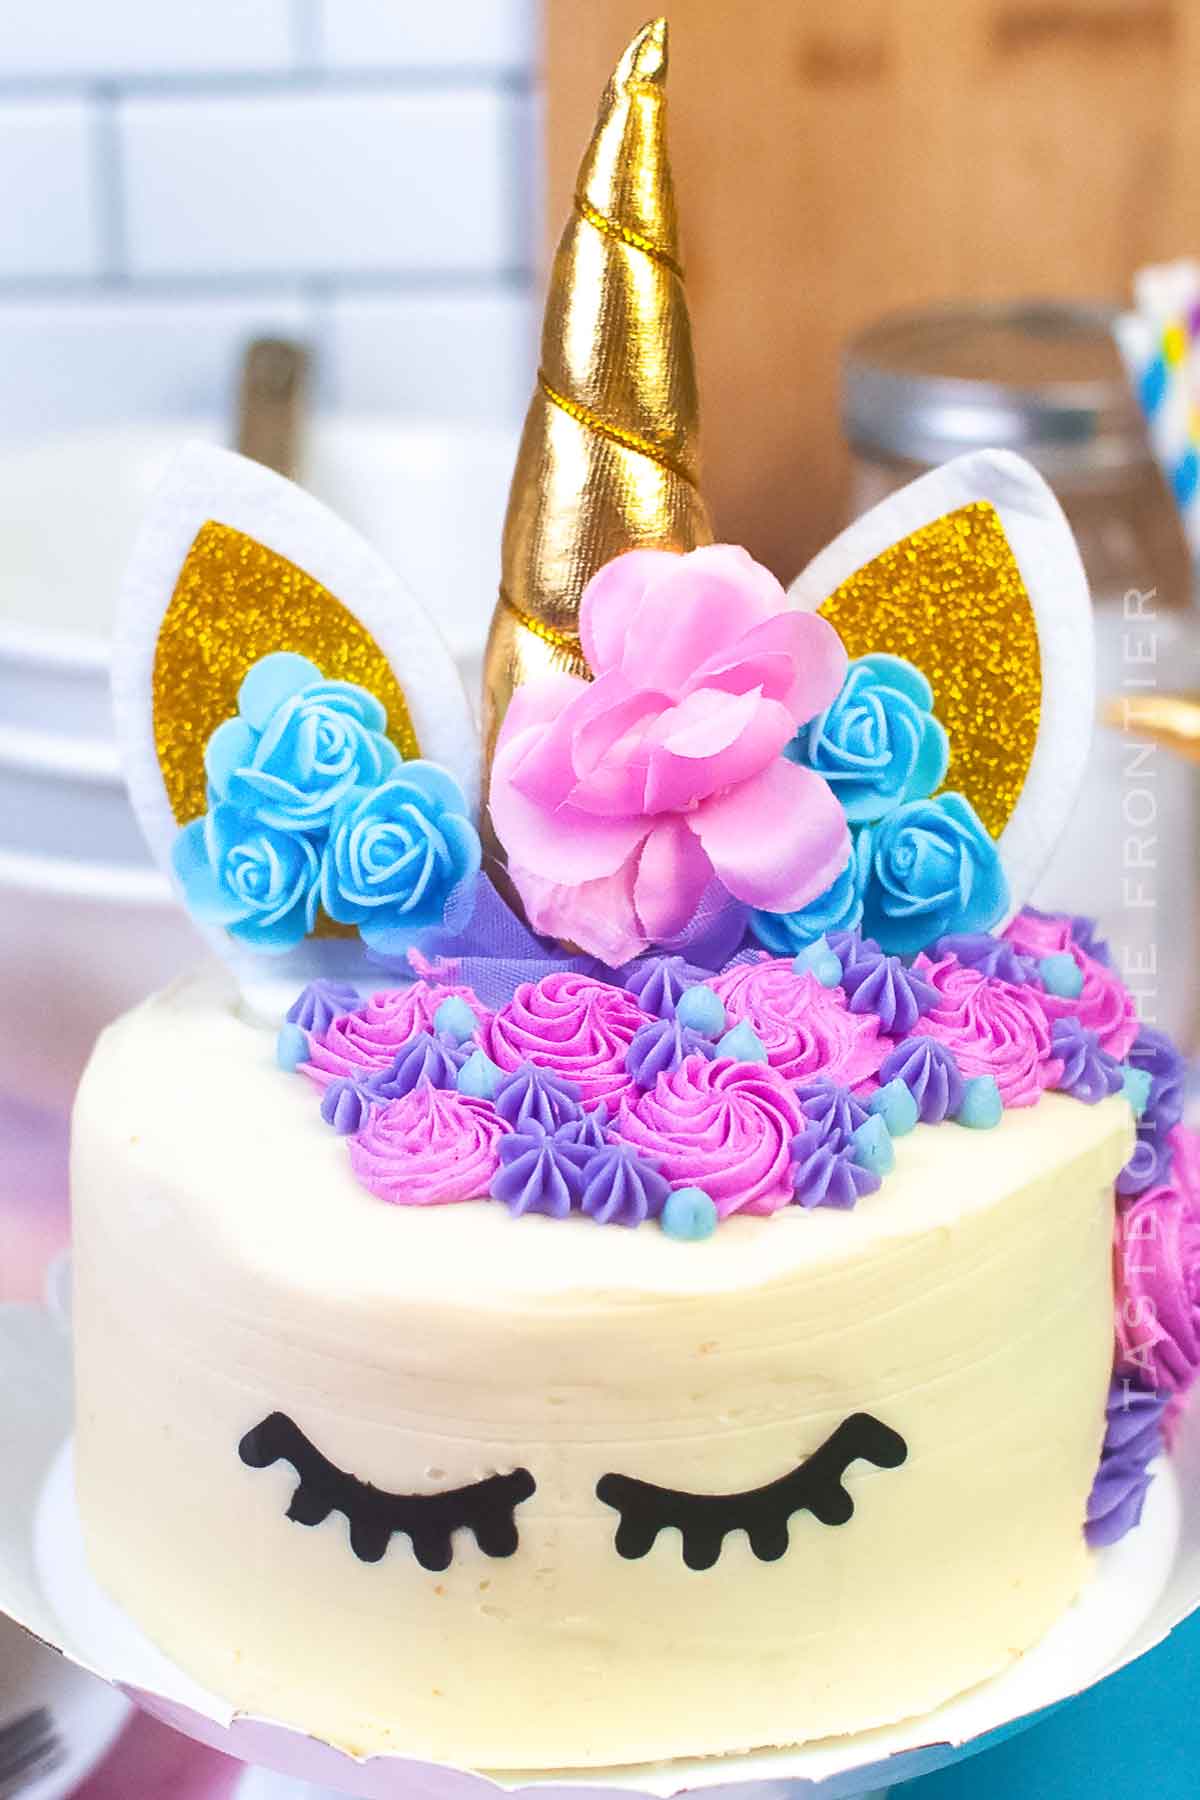 Unicorn Cake Design